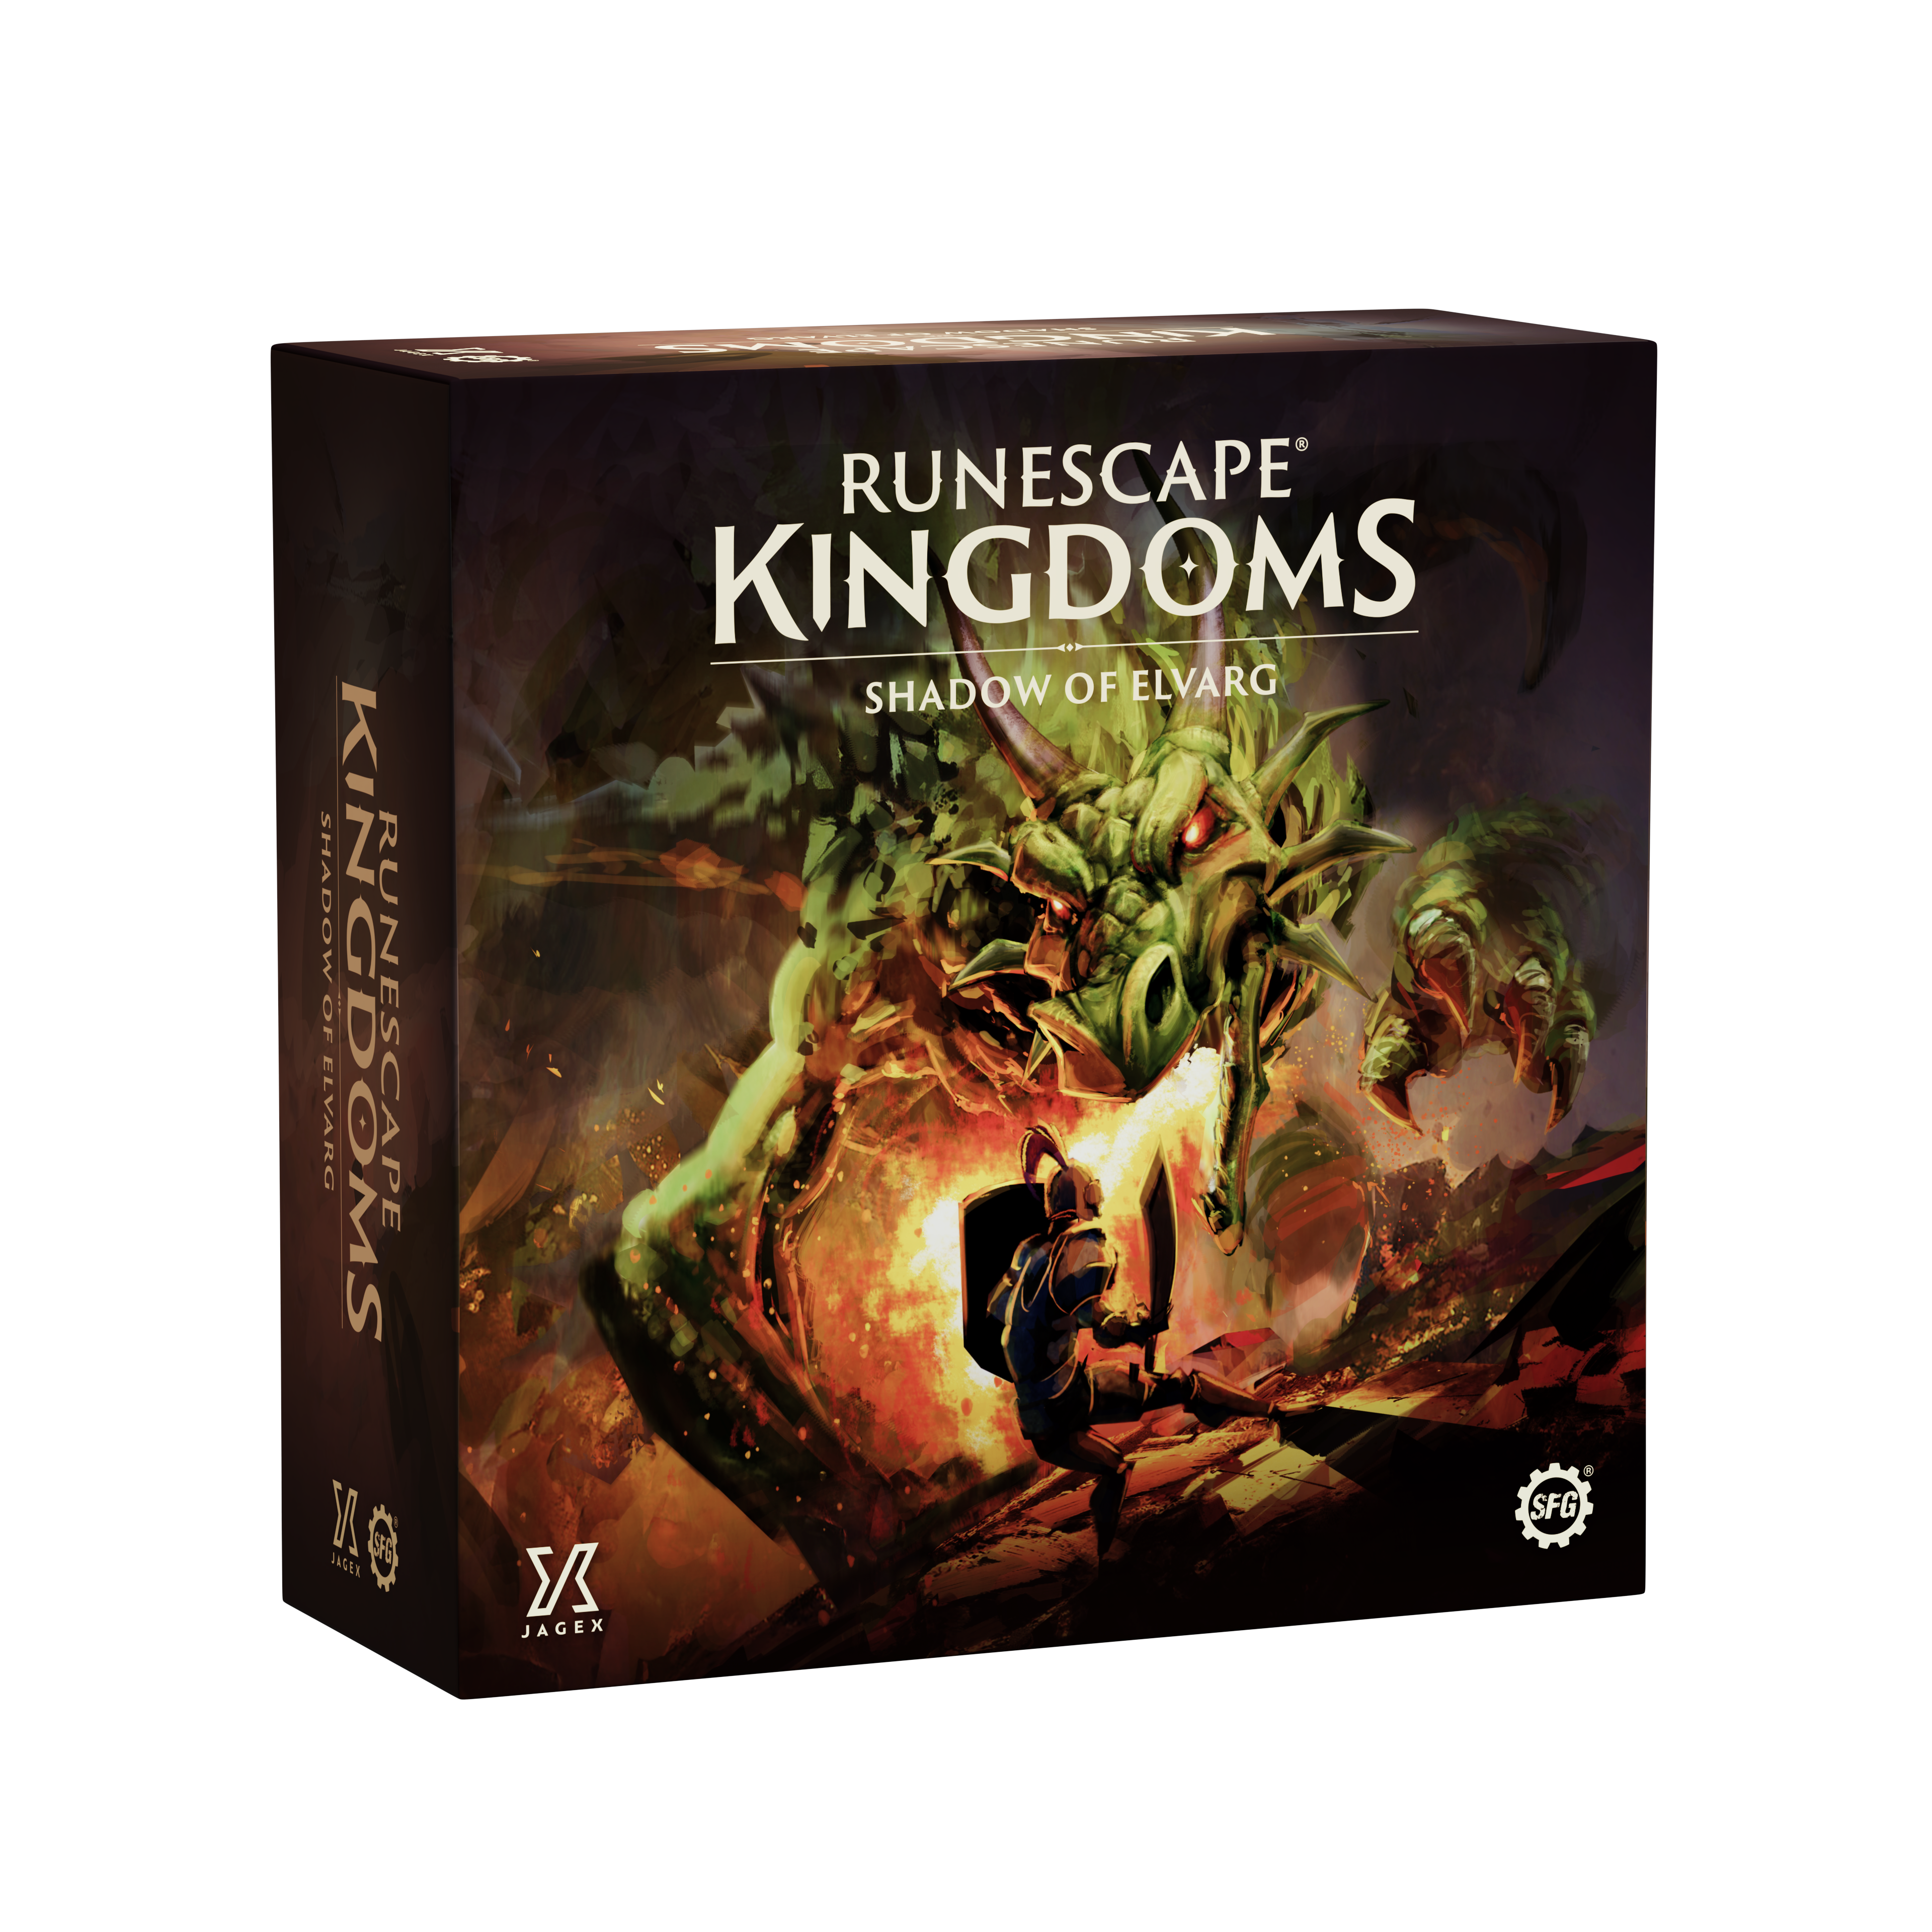 RuneScape board game preview – a tabletop nostalgia trip